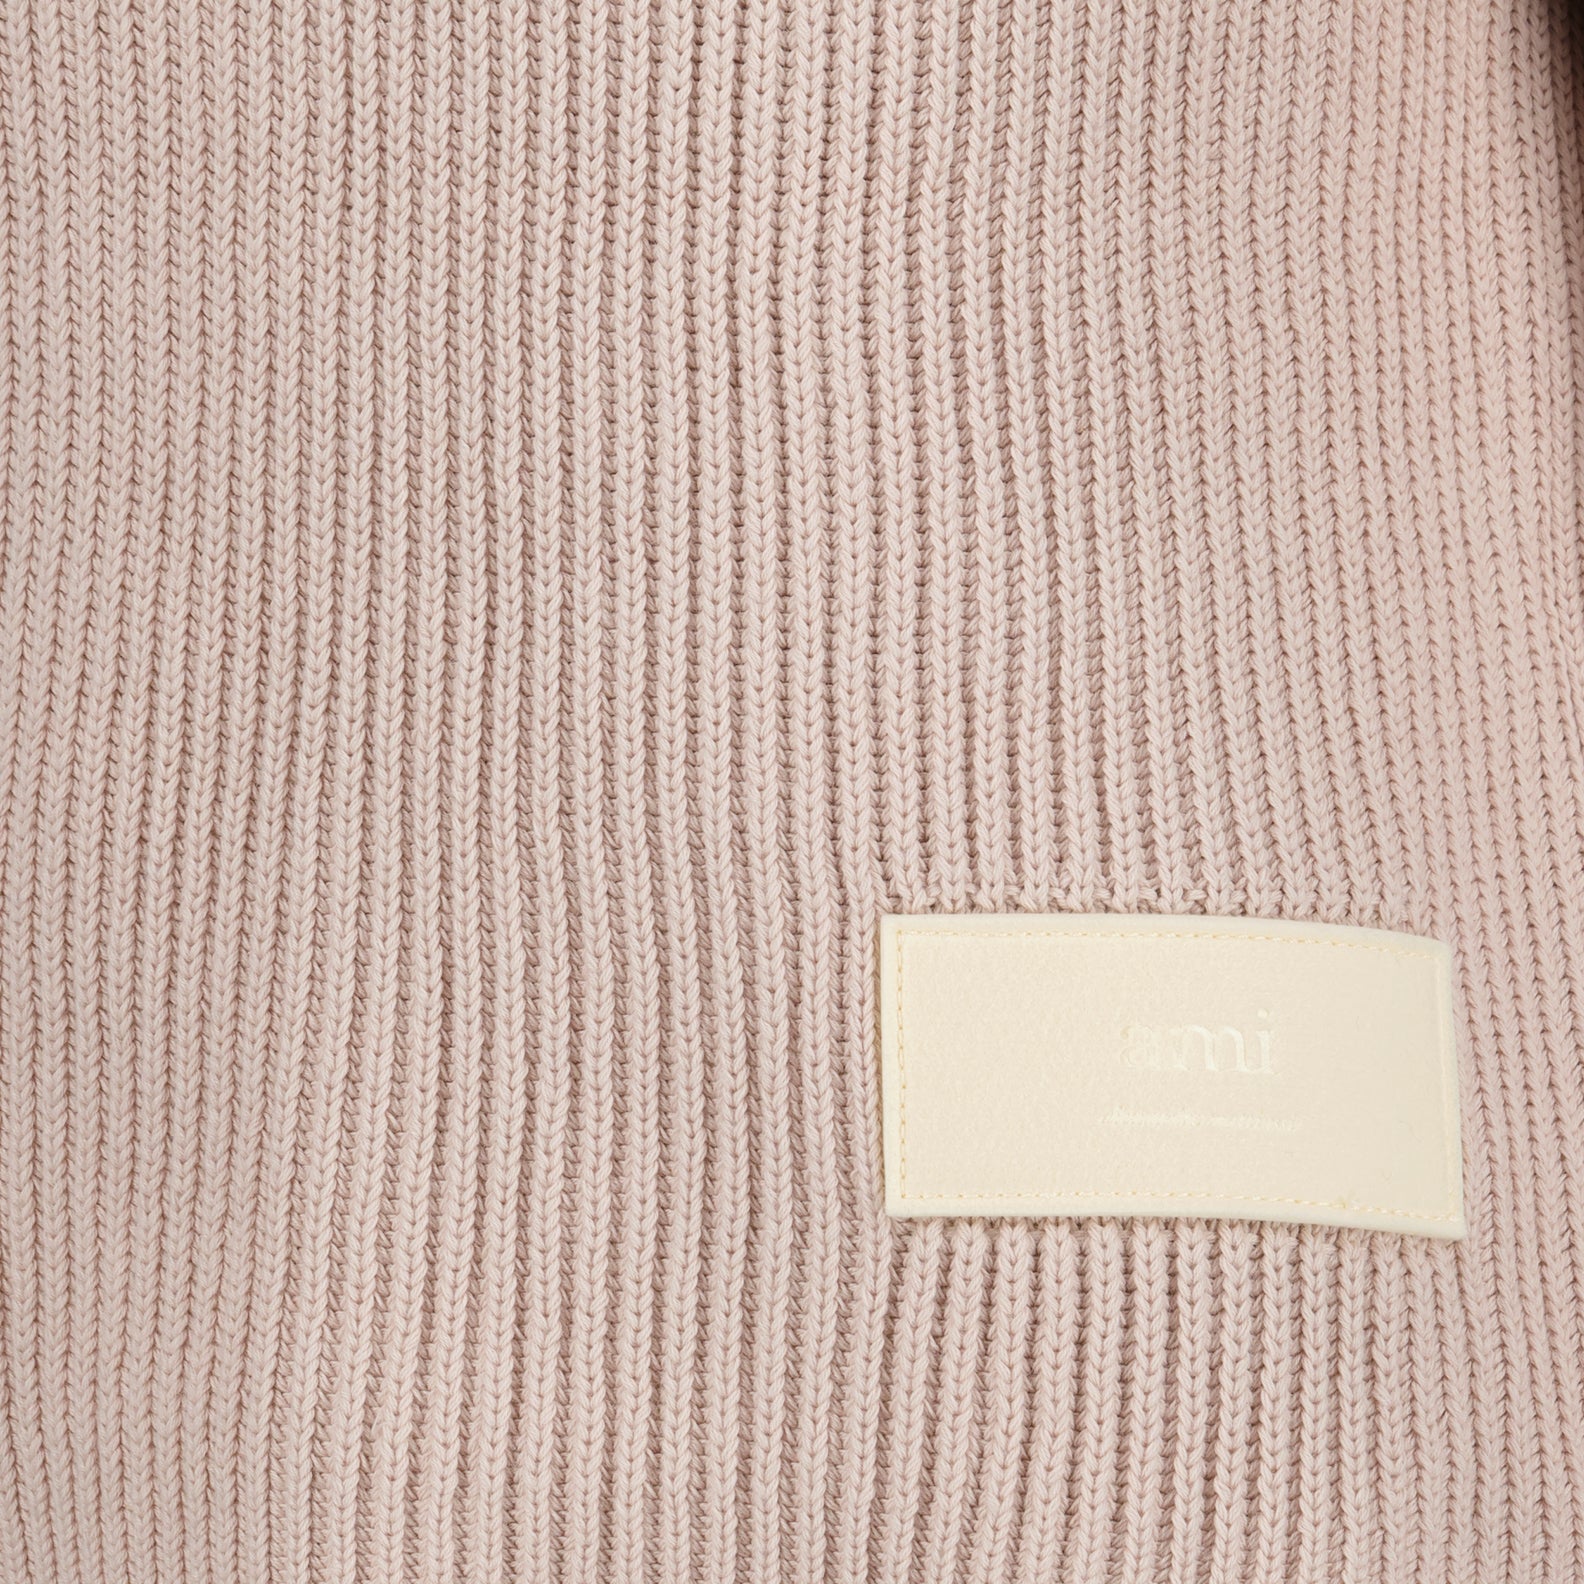 Sweater label